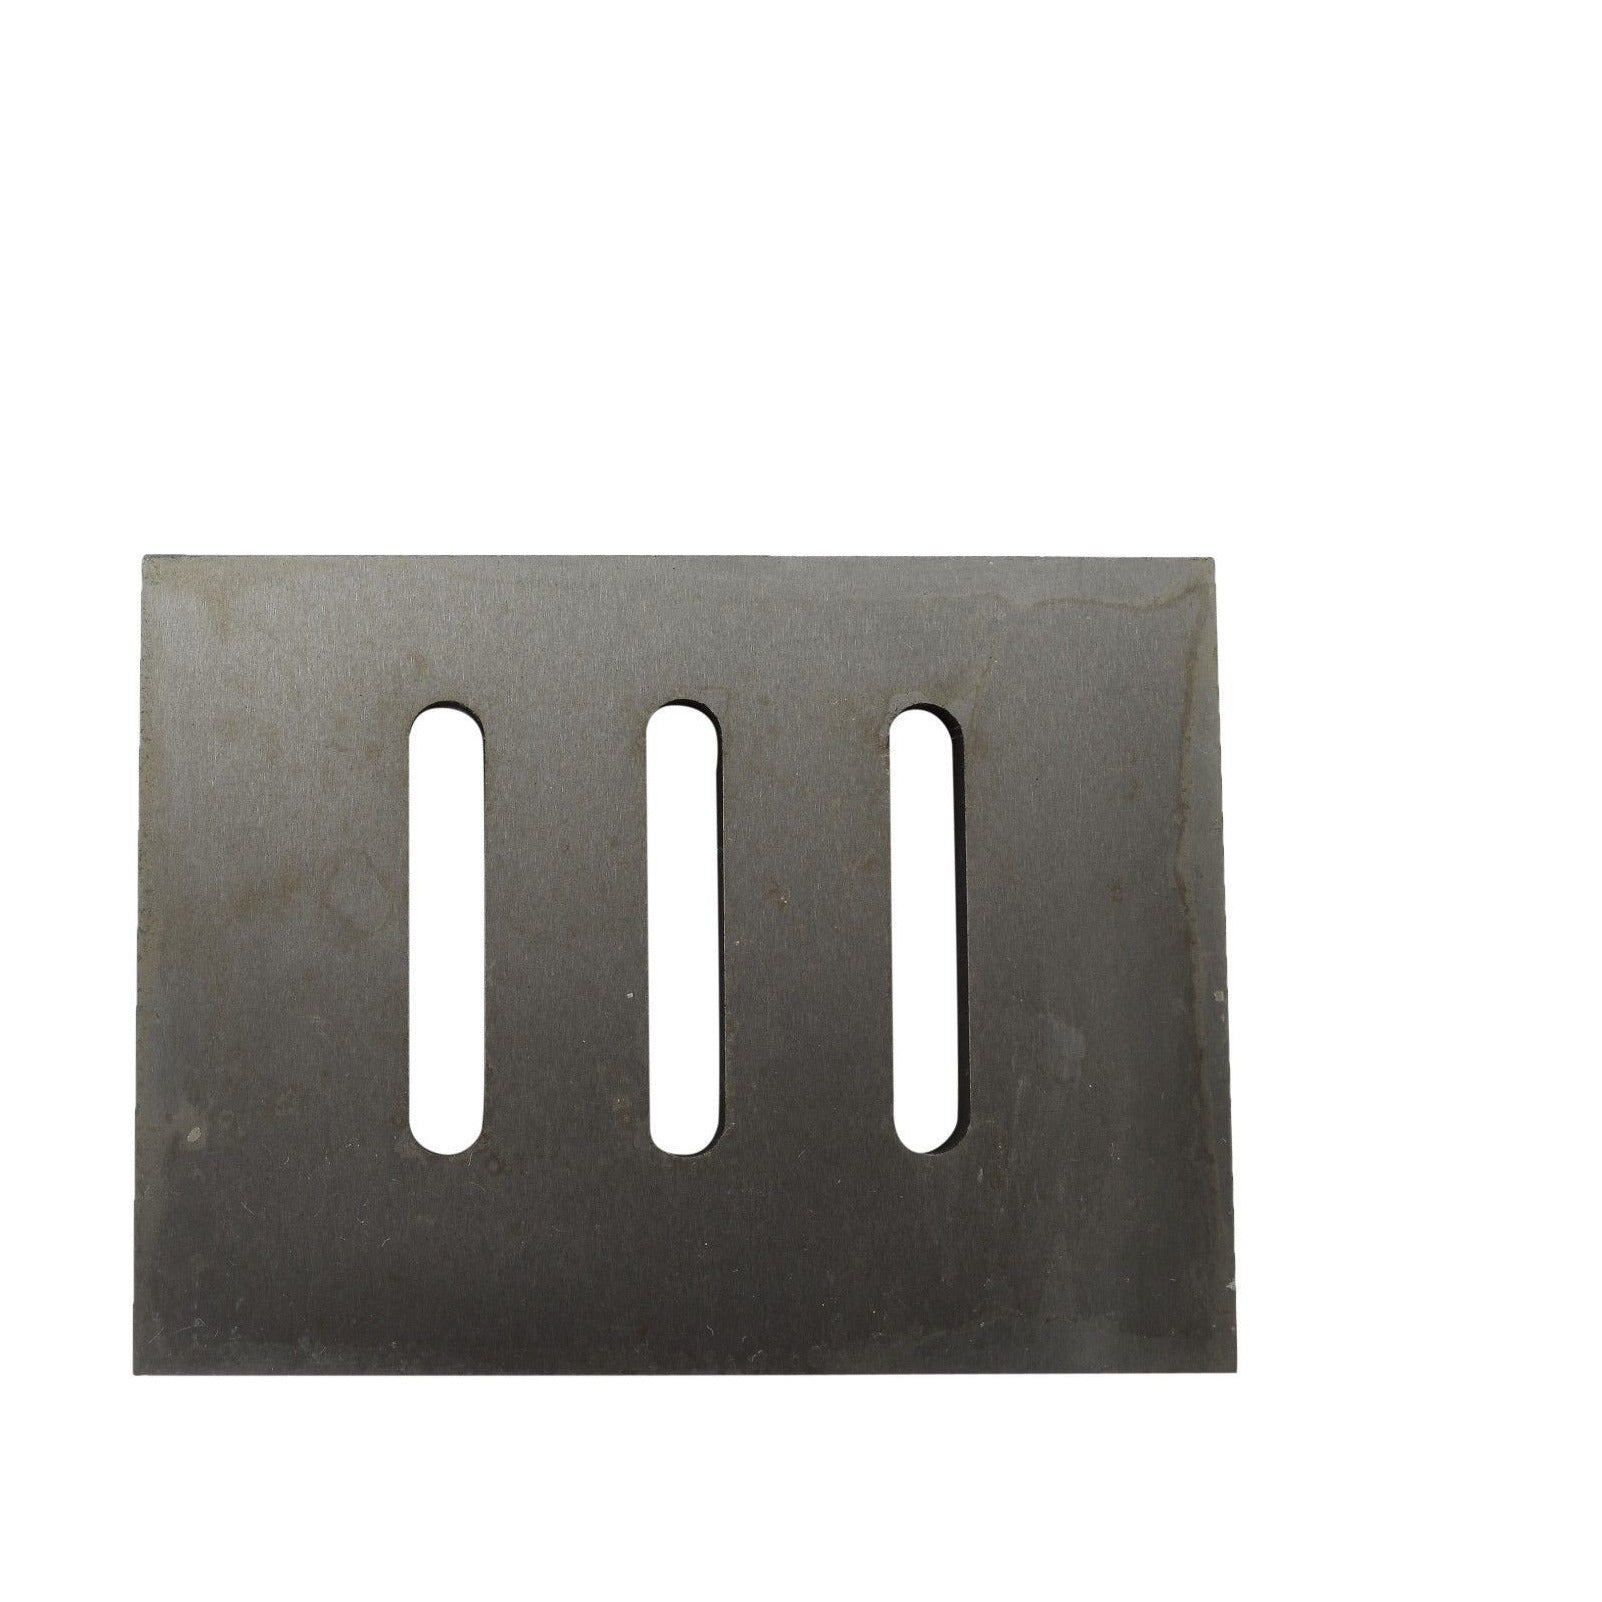 Cast Iron Angle Plate 8" x 6" x 5". Precision Tool. Machining/ Milling/ CNC.